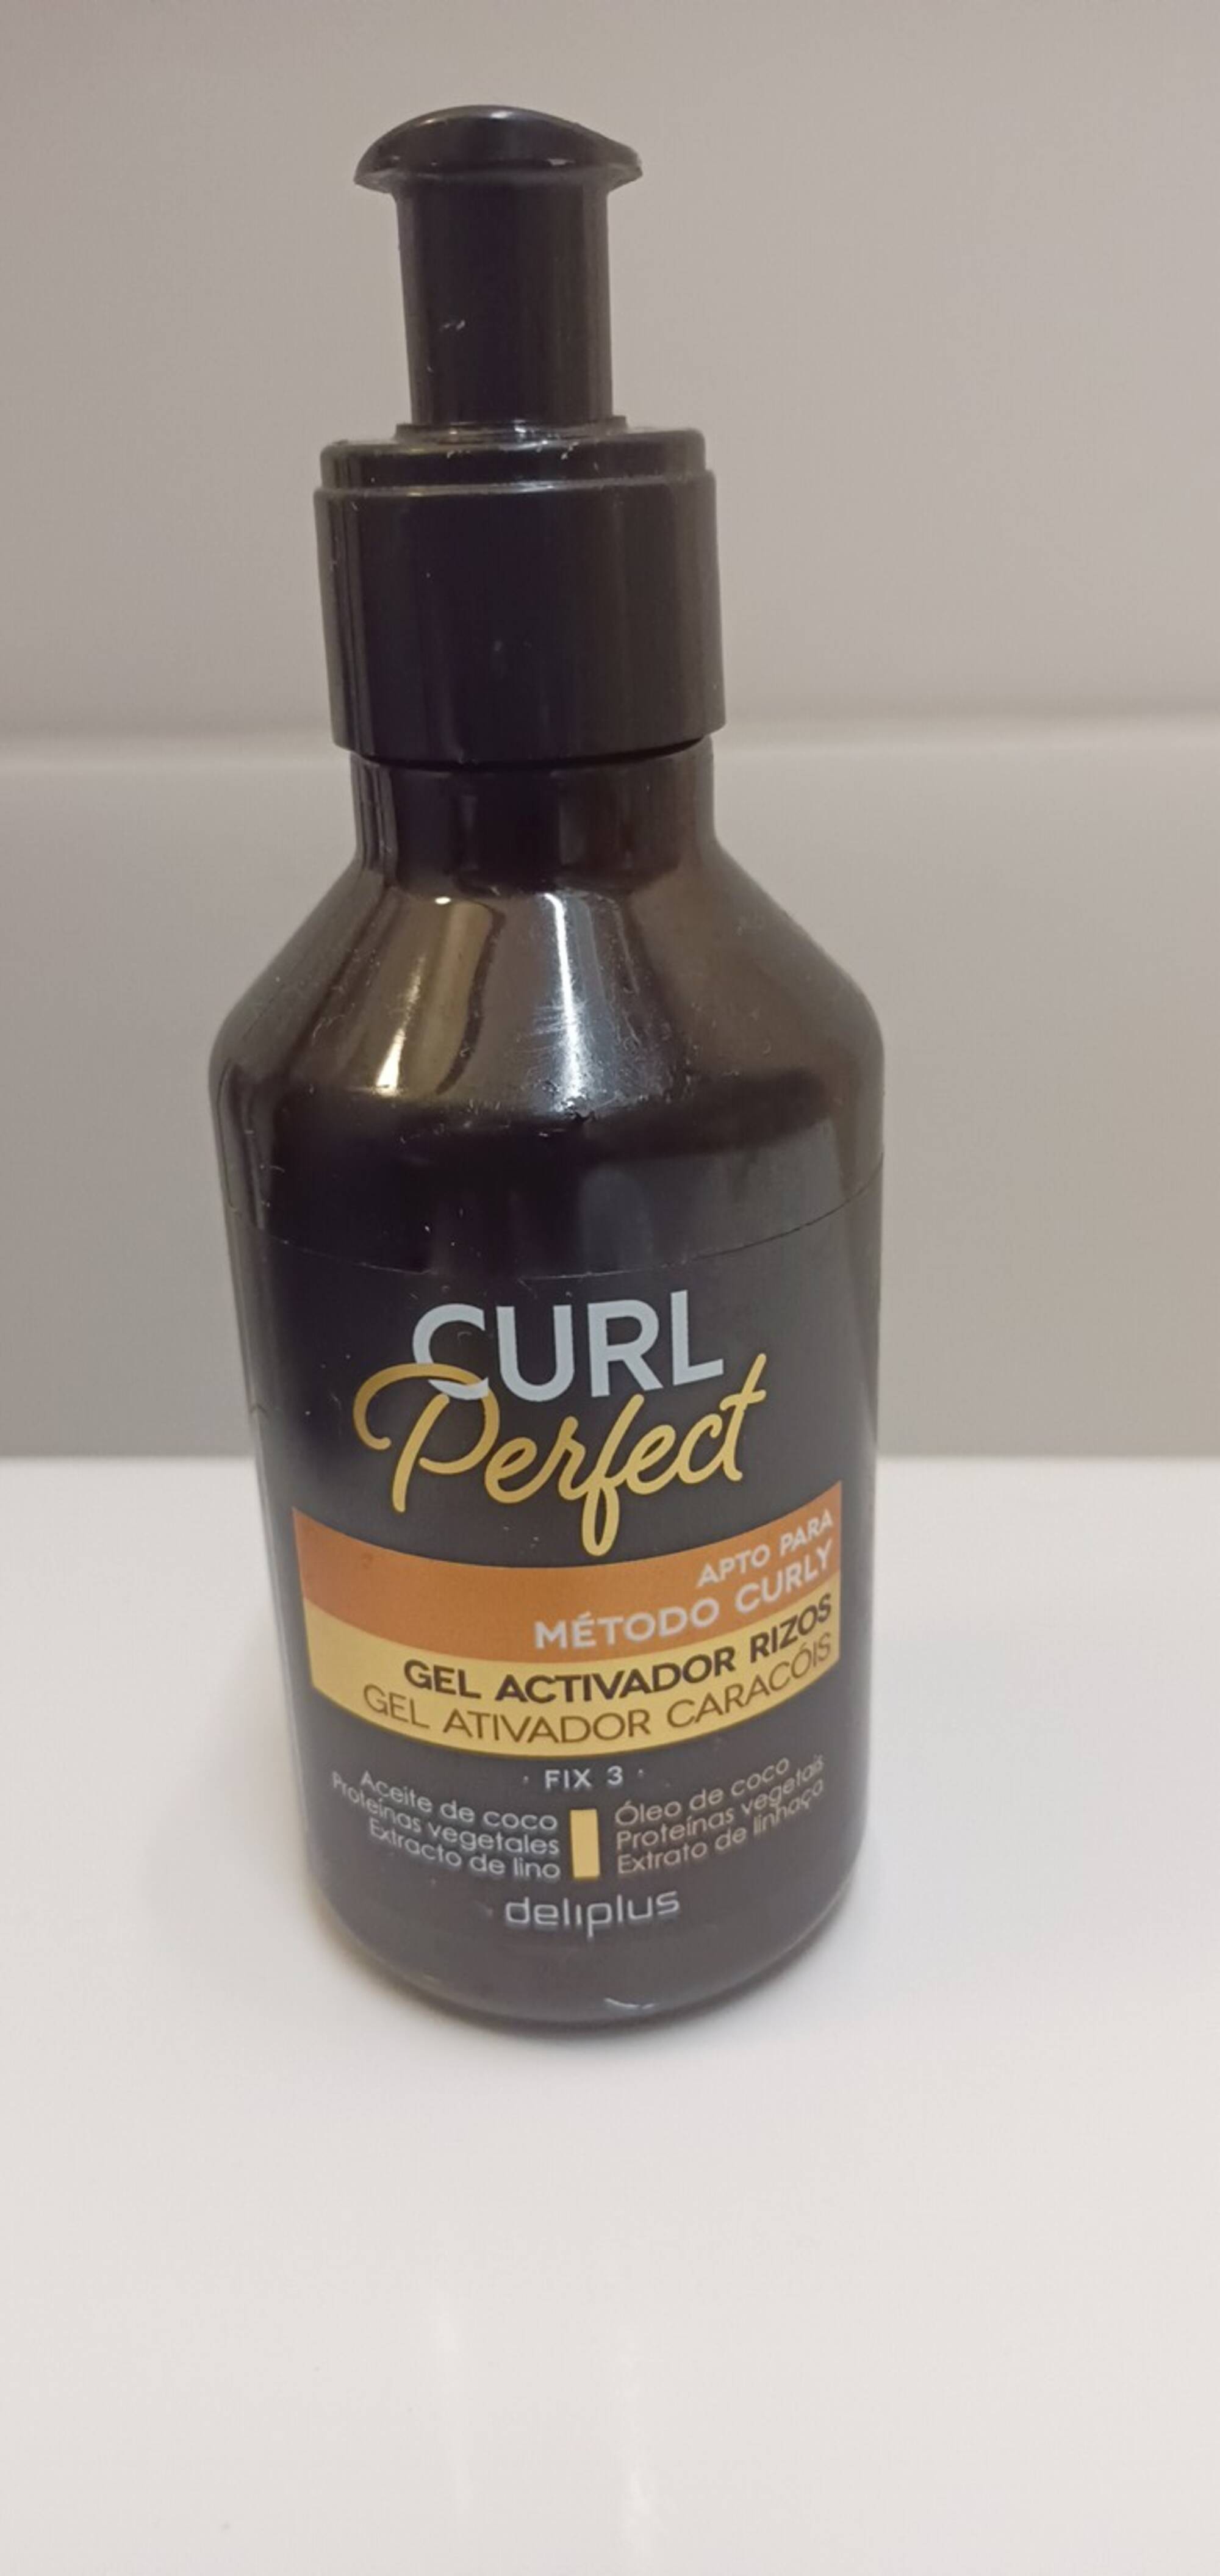 DELIPLUS - Curl perfect - Gel activador rizos fix3